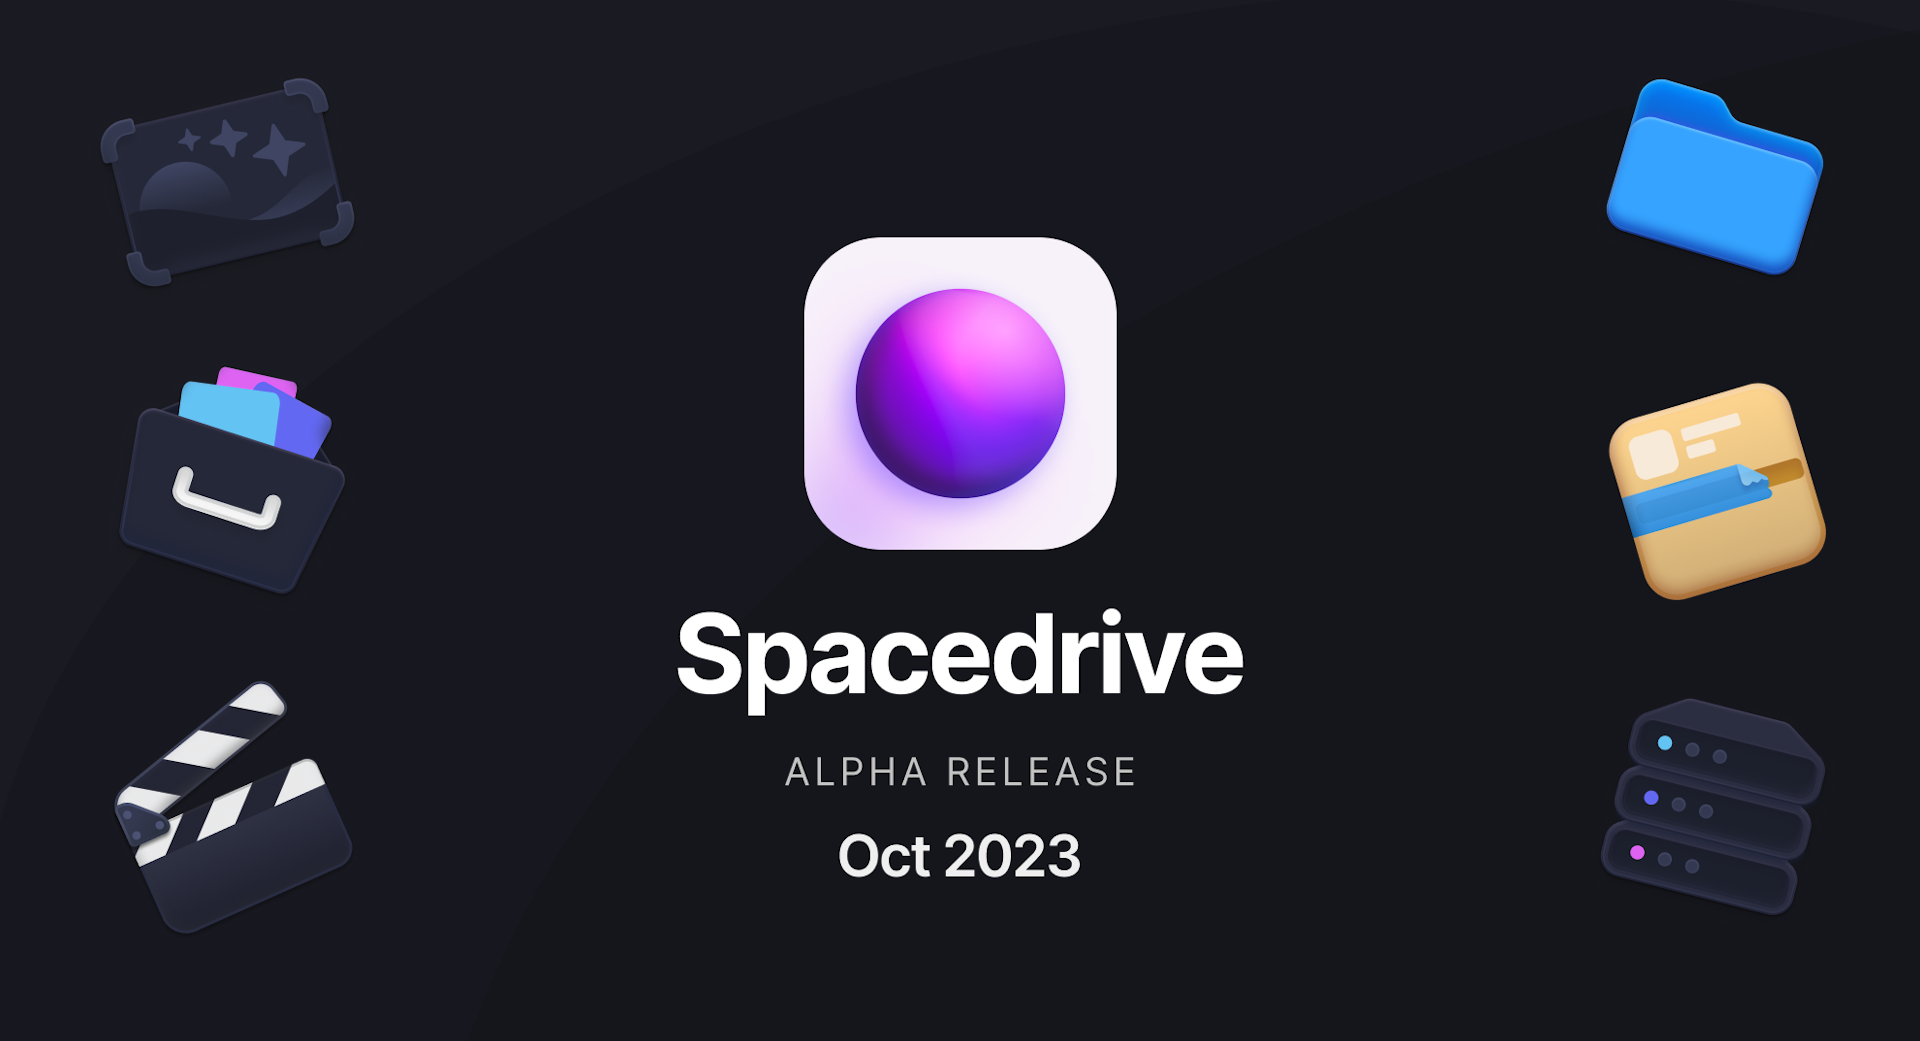 Spacedrive UI snapshot alongside logo